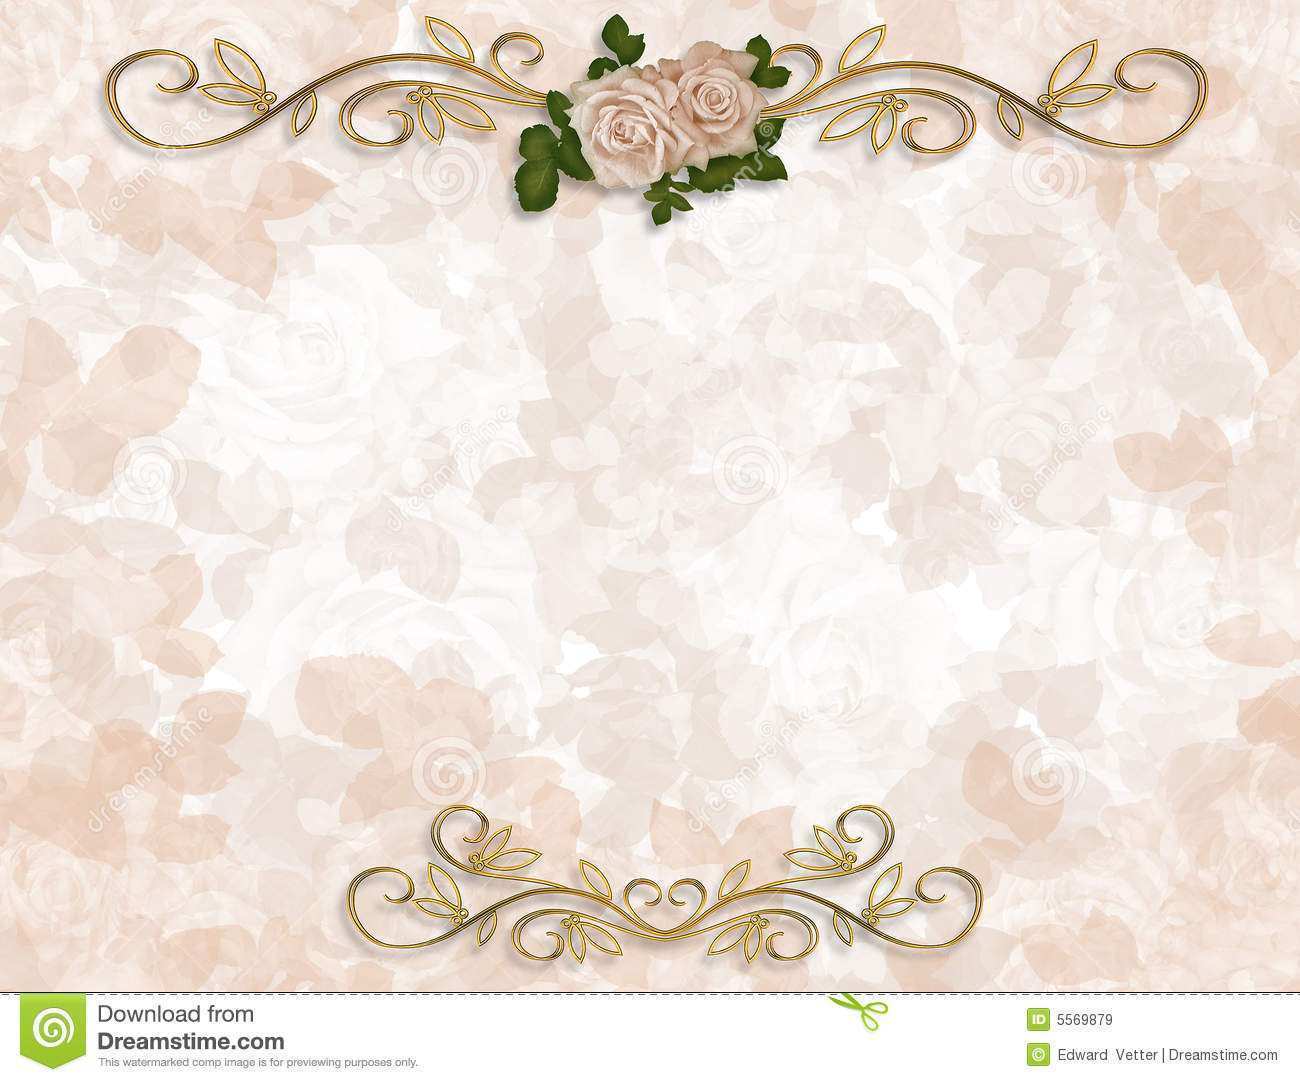 31 Standard Wedding Card Templates Background Download by Wedding Card Templates Background